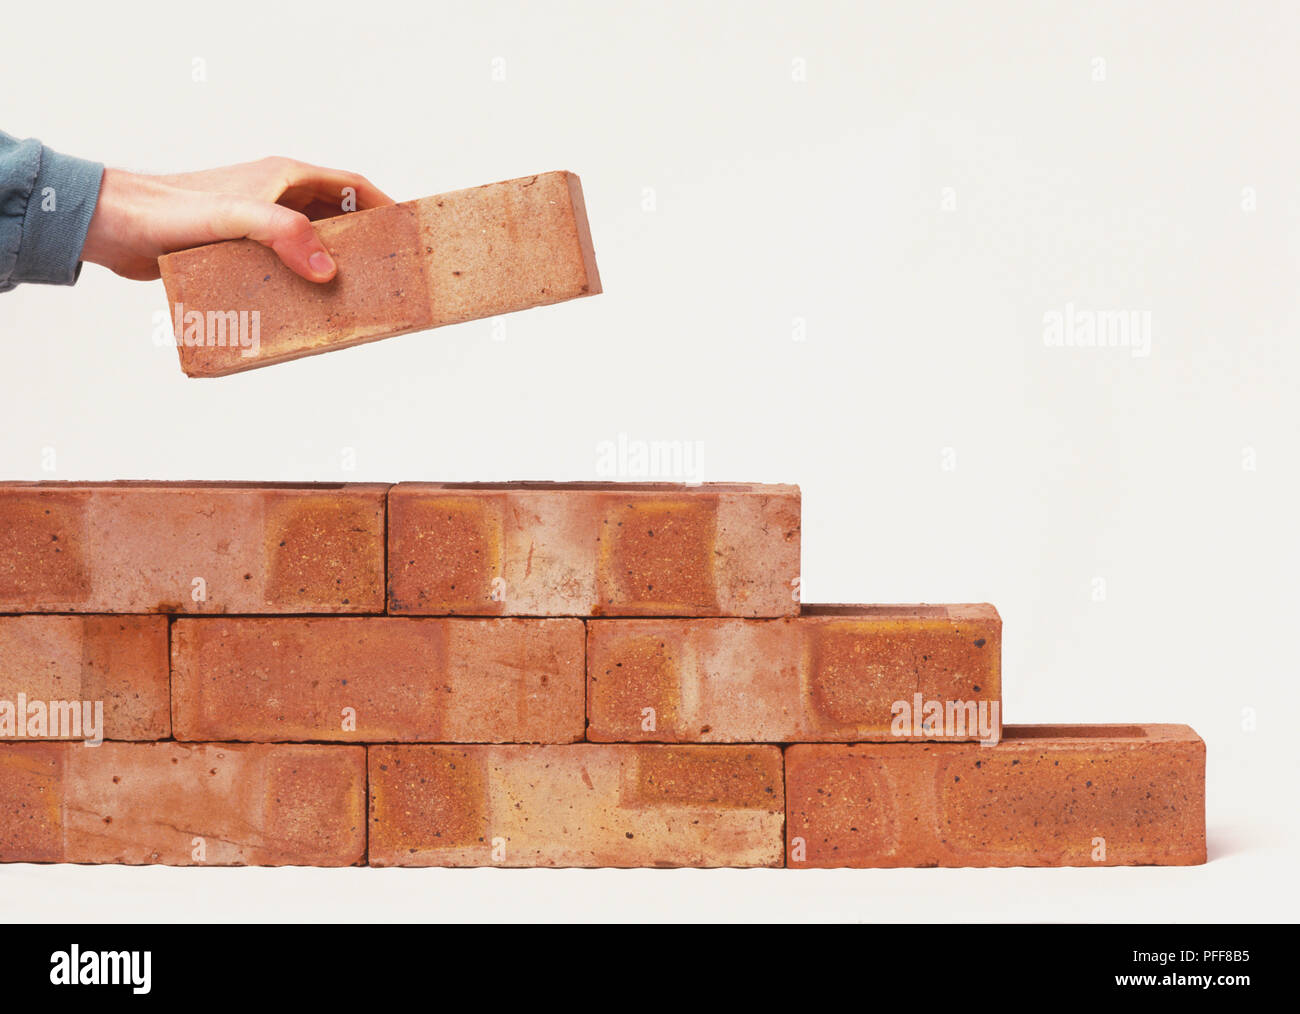 Laying bricks Stock Photo